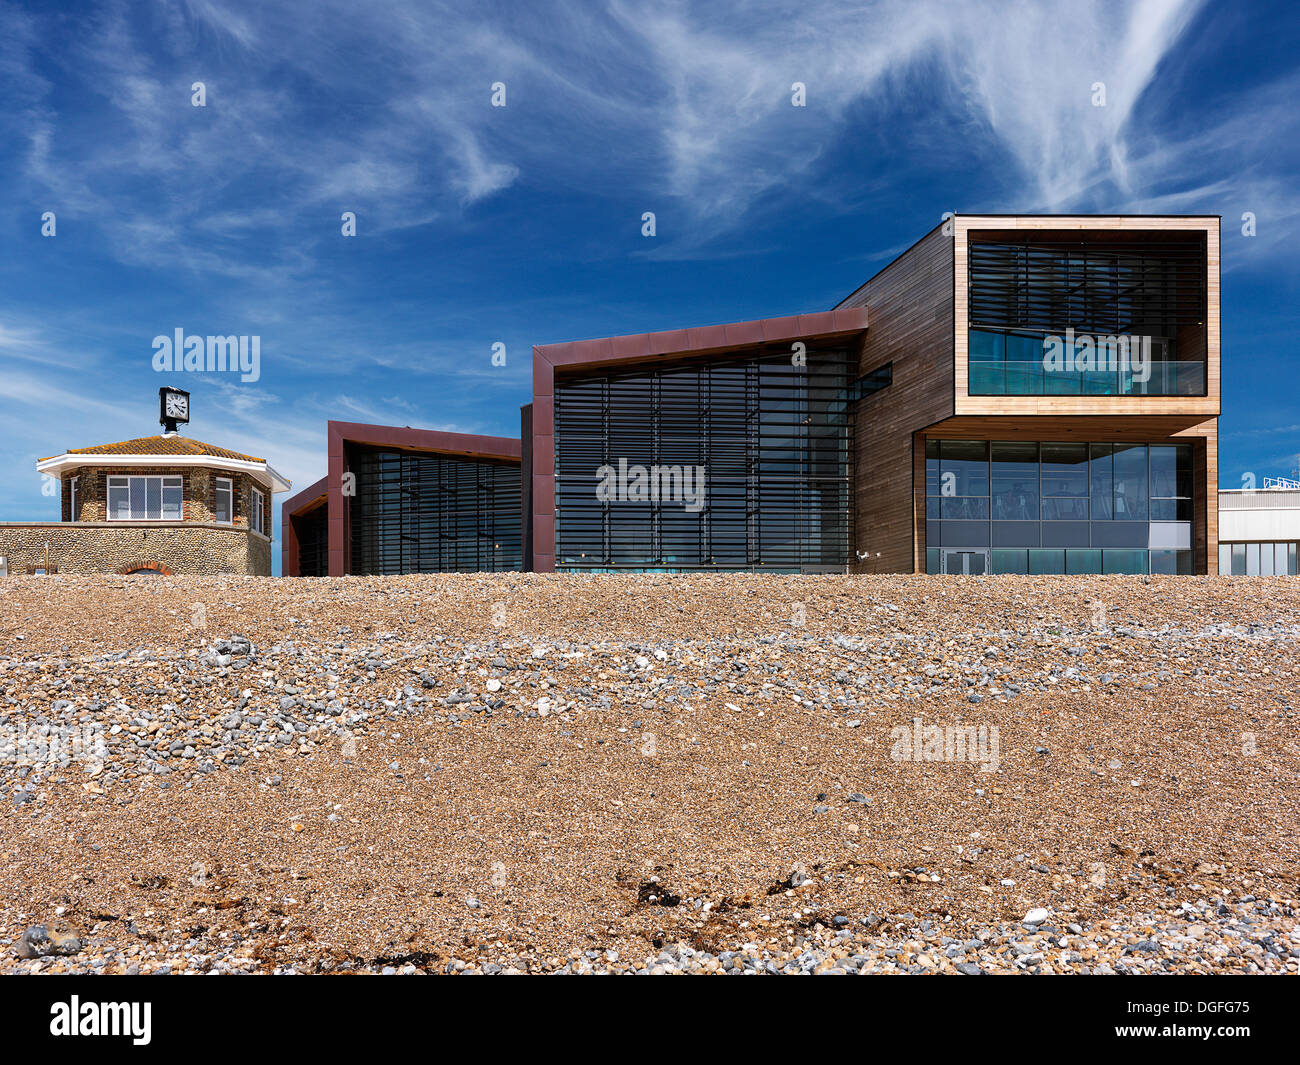 Splashpoint Leisure Centre, Worthing, United Kingdom. Architect: Wilkinson Eyre Architects, 2013. South facing seaside facade. Stock Photo